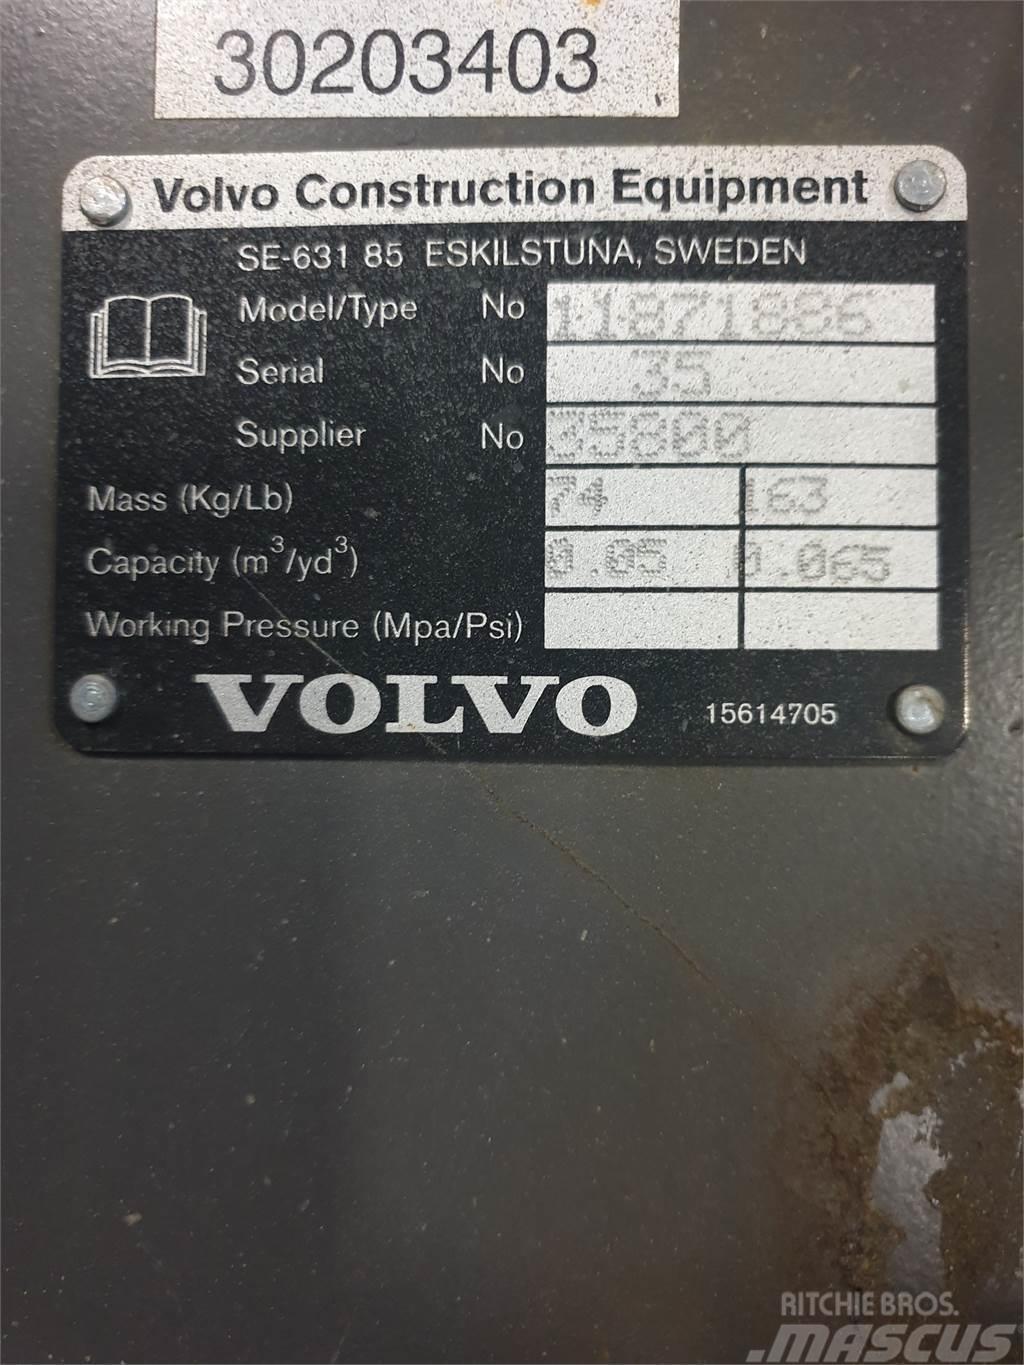 Volvo Kabelskopa S40 300mm Skuffer